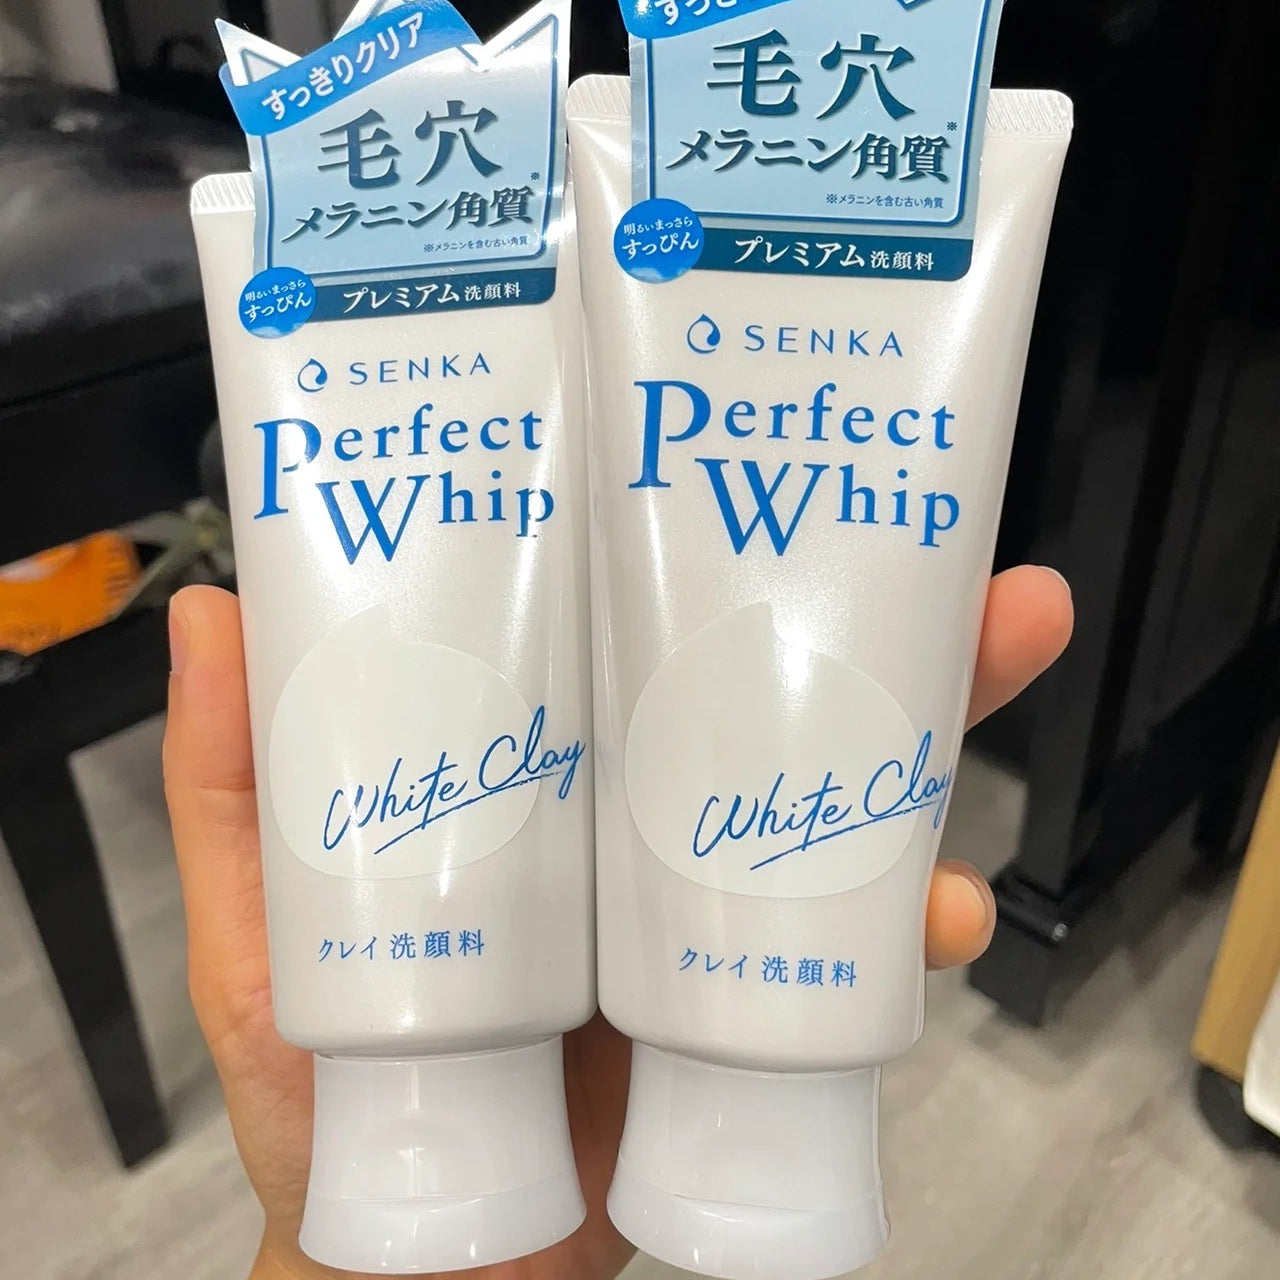 SHISEIDO SENKA Perfect White Clay In Facial Cleanser 120g